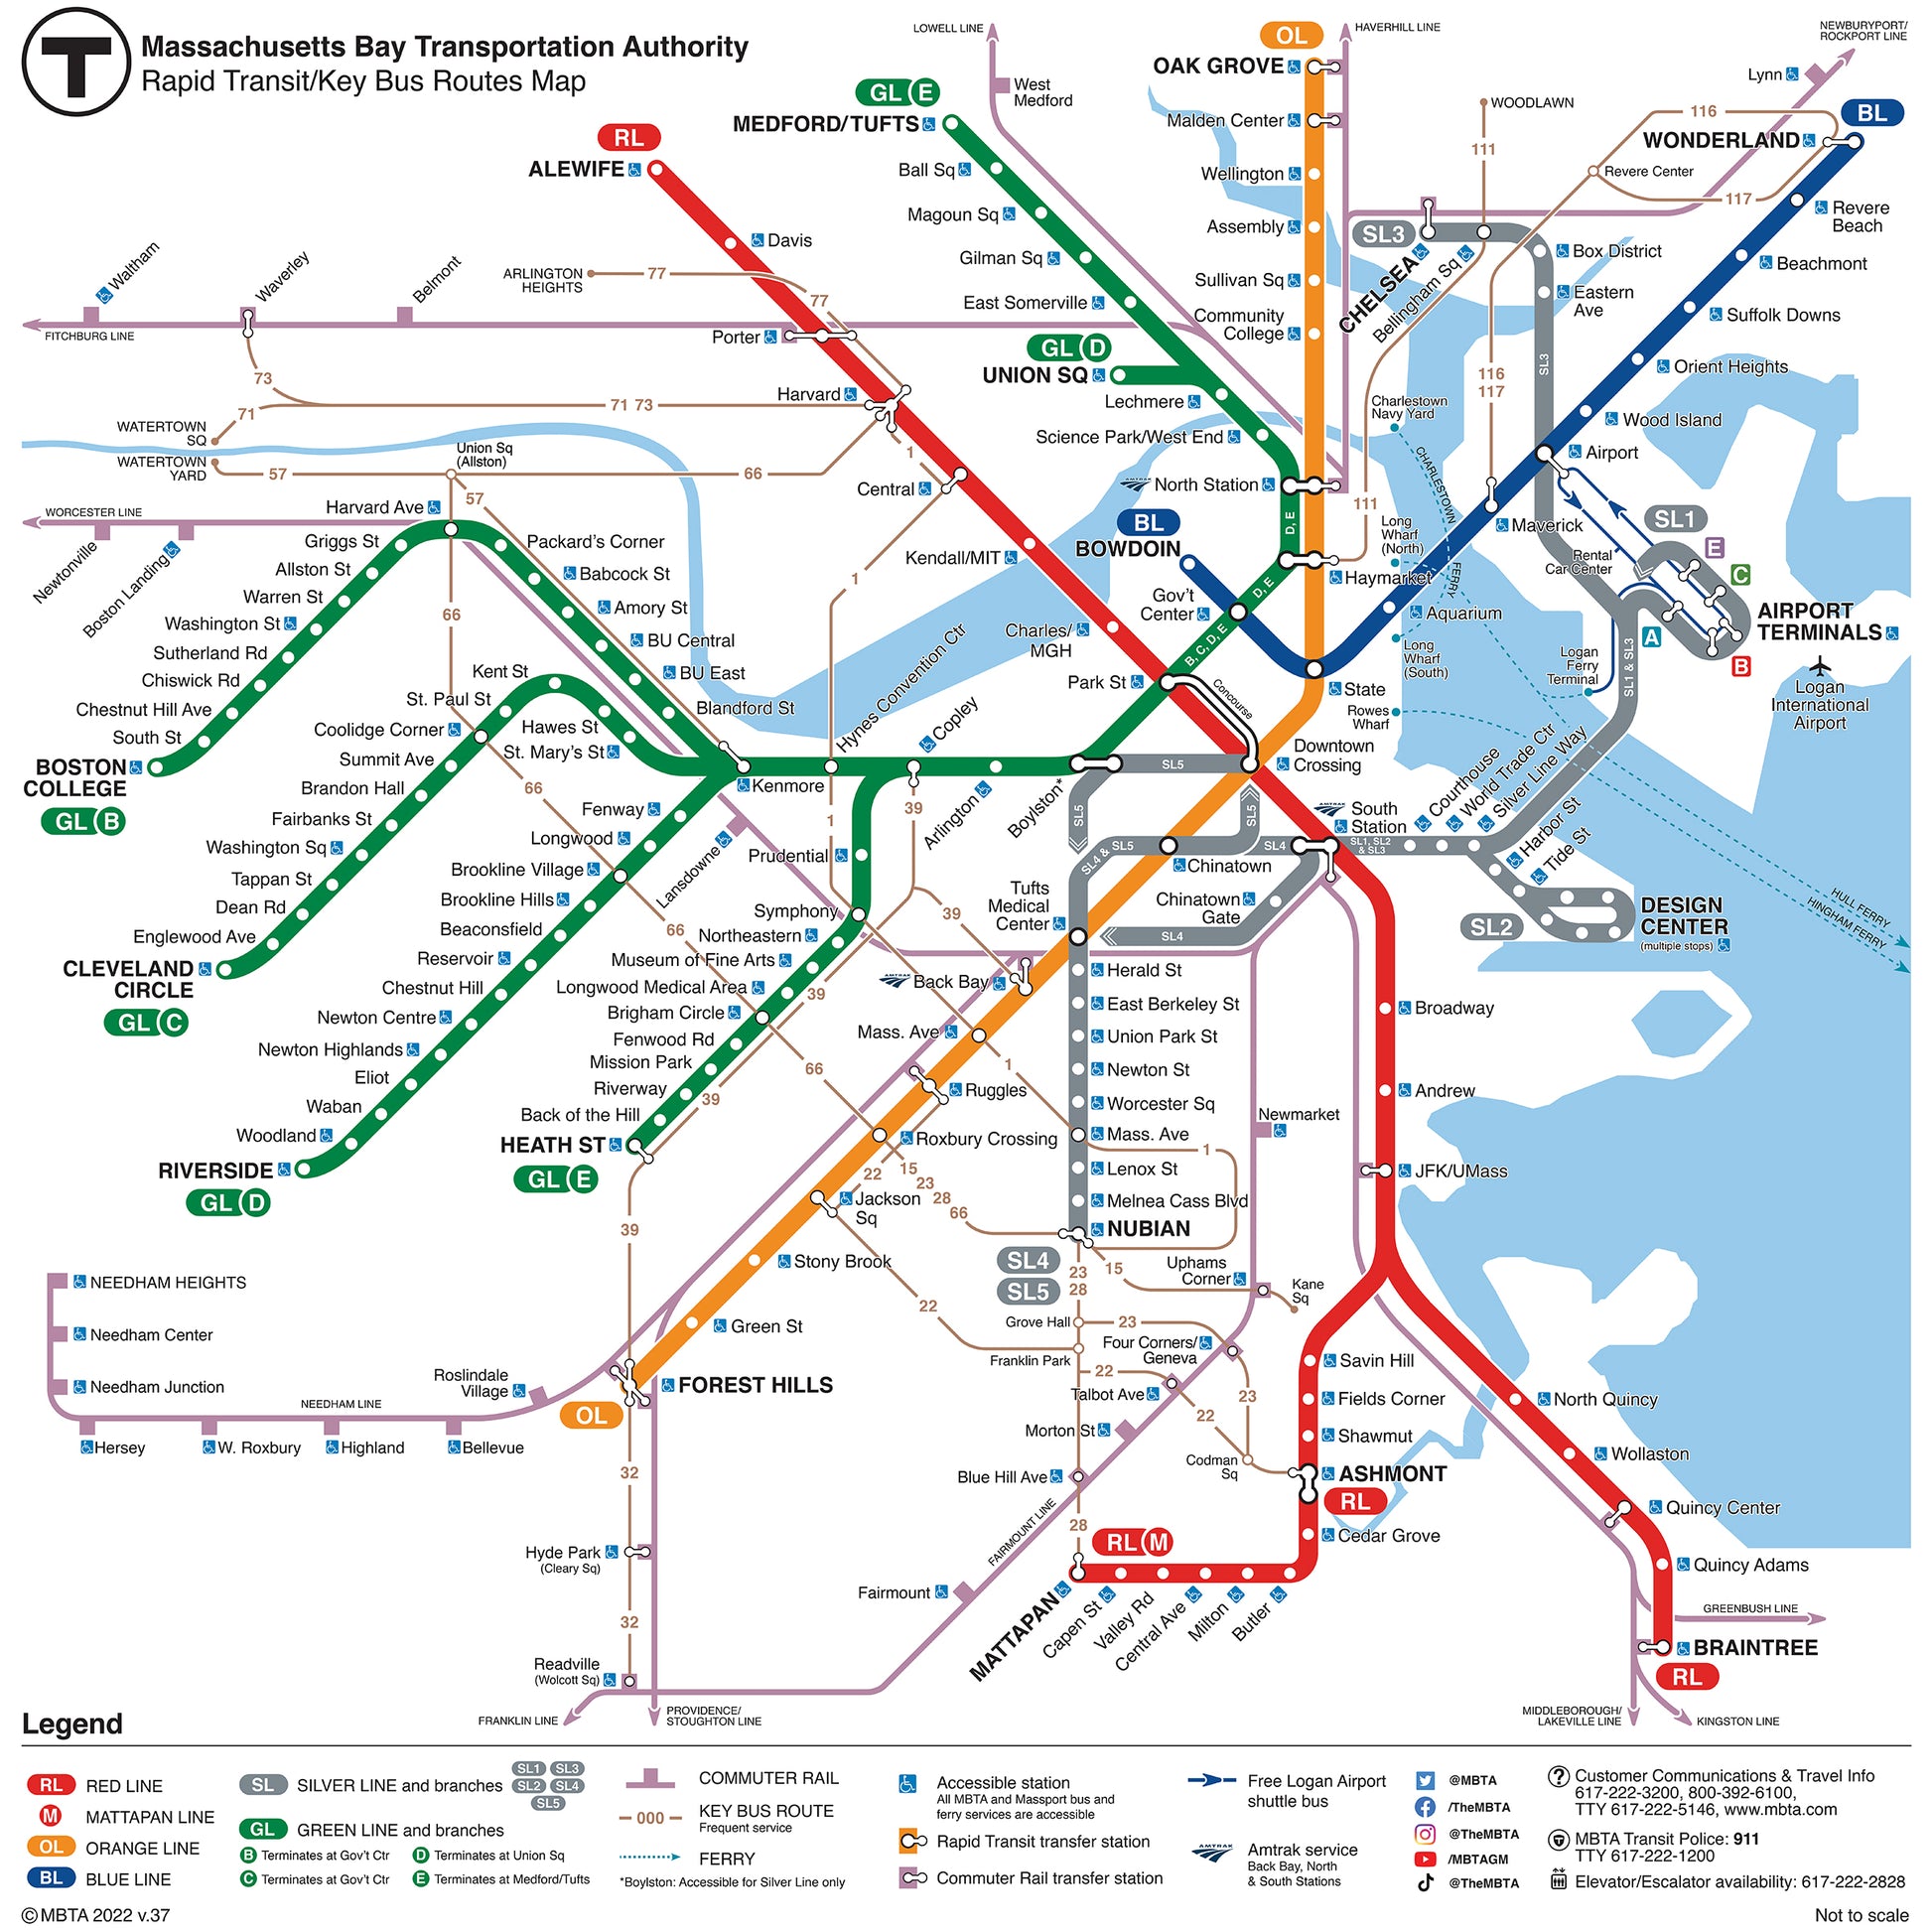 2022 MBTA Rapid Transit / Key Bus Routes Map with GLX (Nov. 2022)